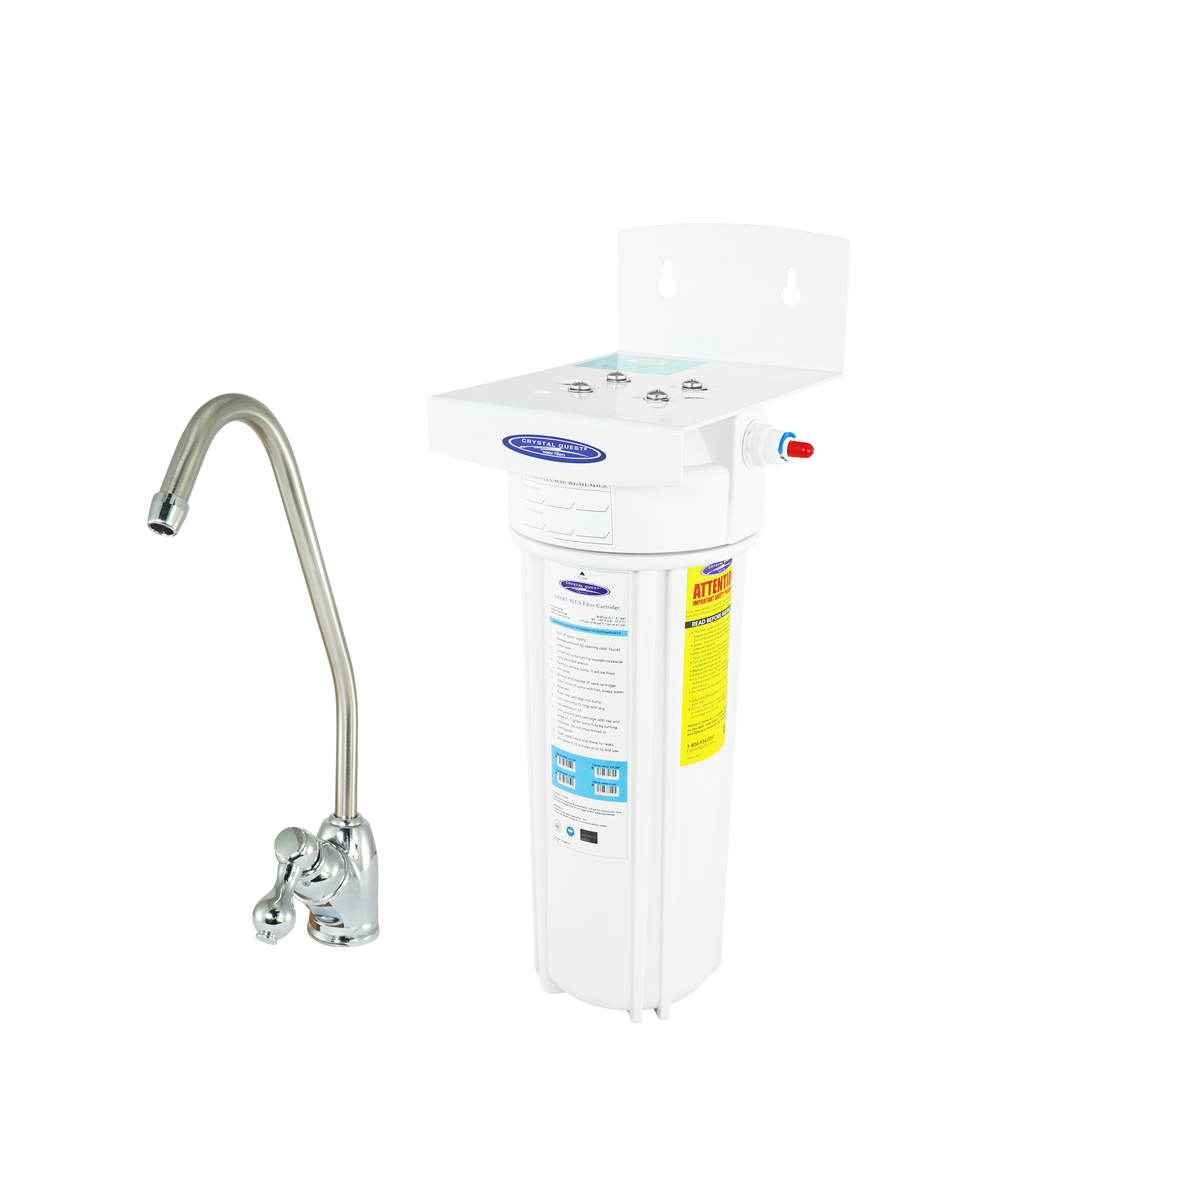 Fluoride Removal + SMART Single Under Sink Water Filter System - Under Sink Water Filters - Crystal Quest